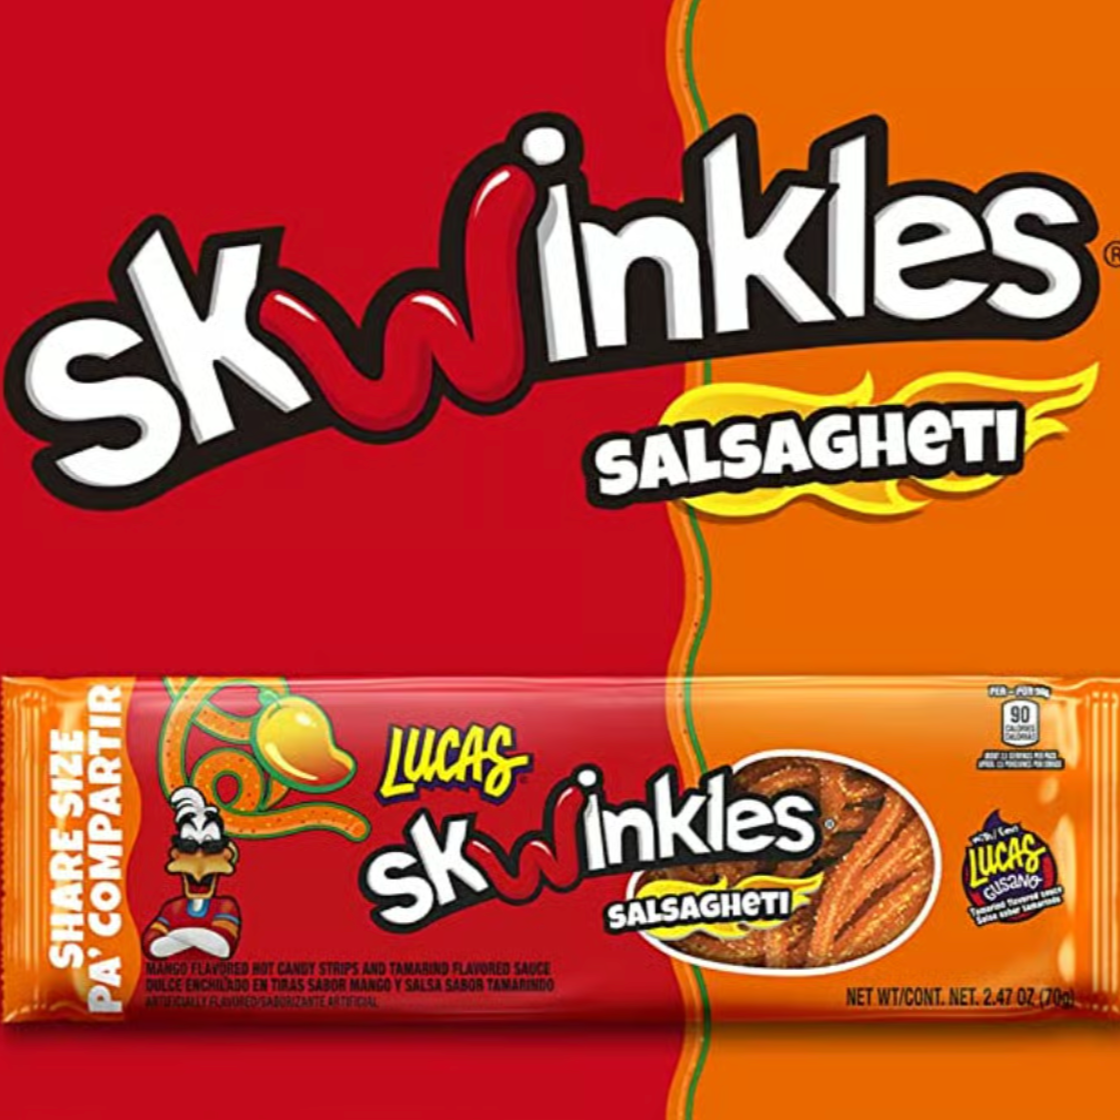 Lucas - Skwinkles Salsagheti Mango (Mexico)